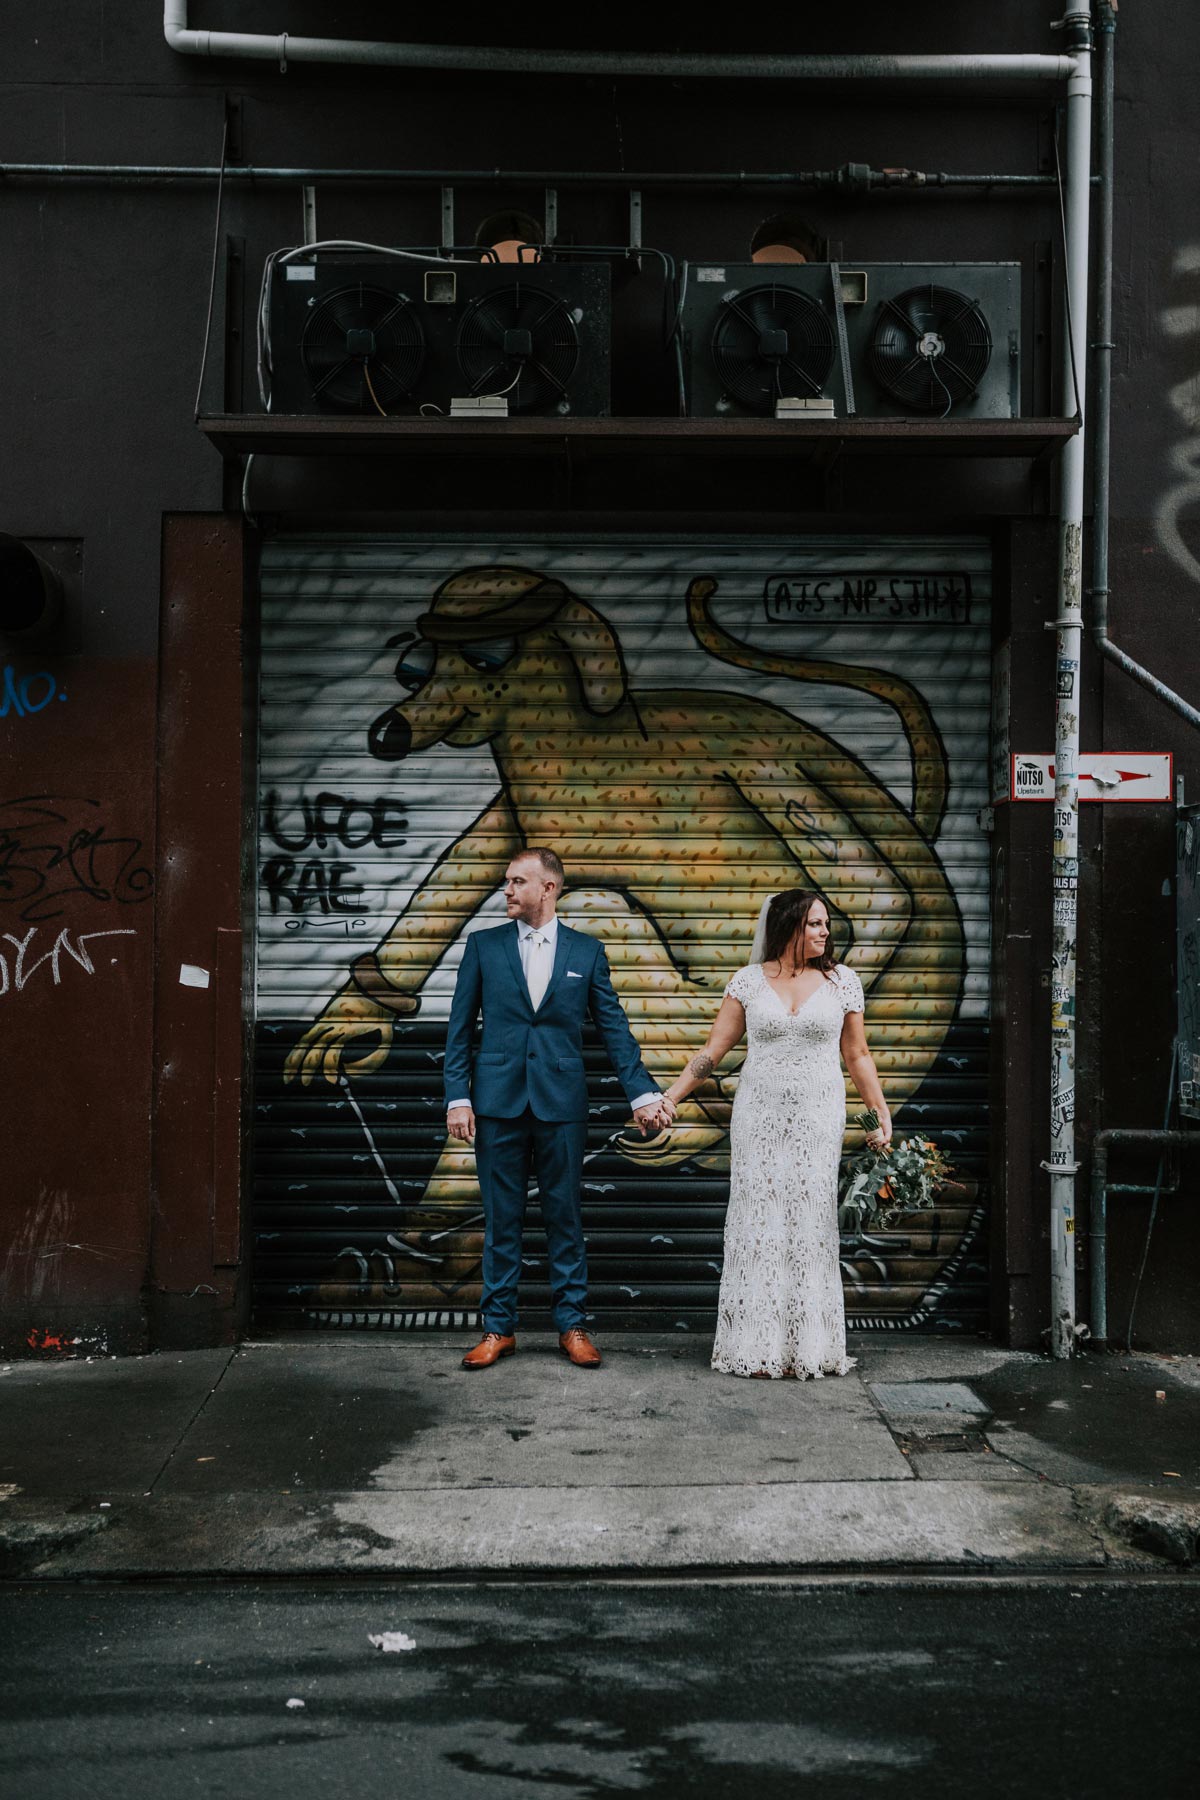 Chancery Chambers Wedding Auckland Cross Street urban graffiti wedding photo ideas Sarah Weber Photography